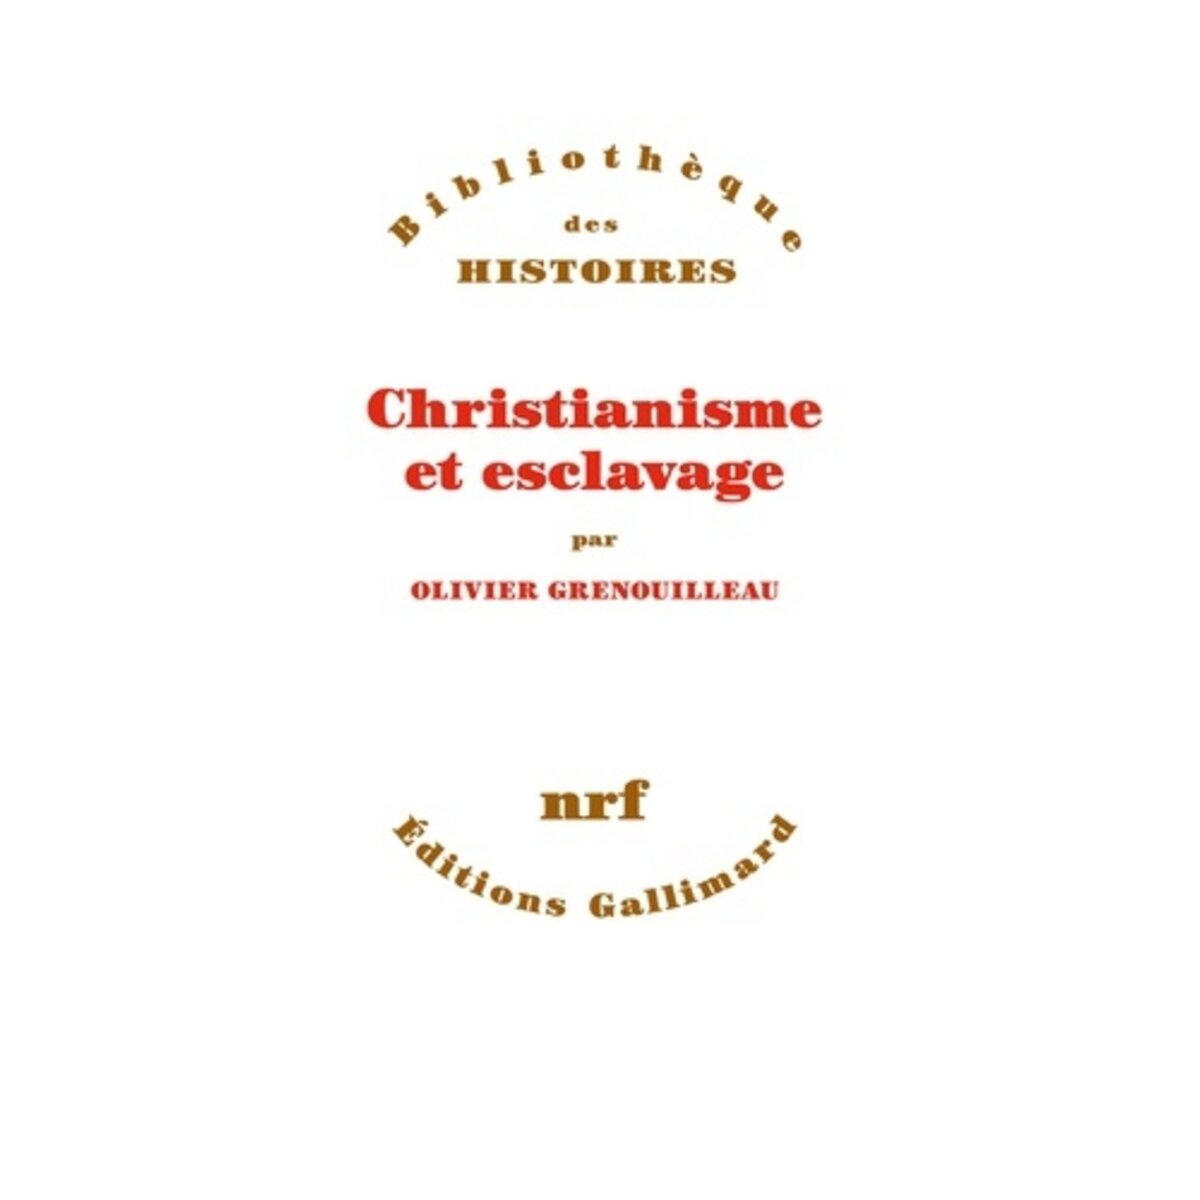  CHRISTIANISME ET ESCLAVAGE, Grenouilleau Olivier